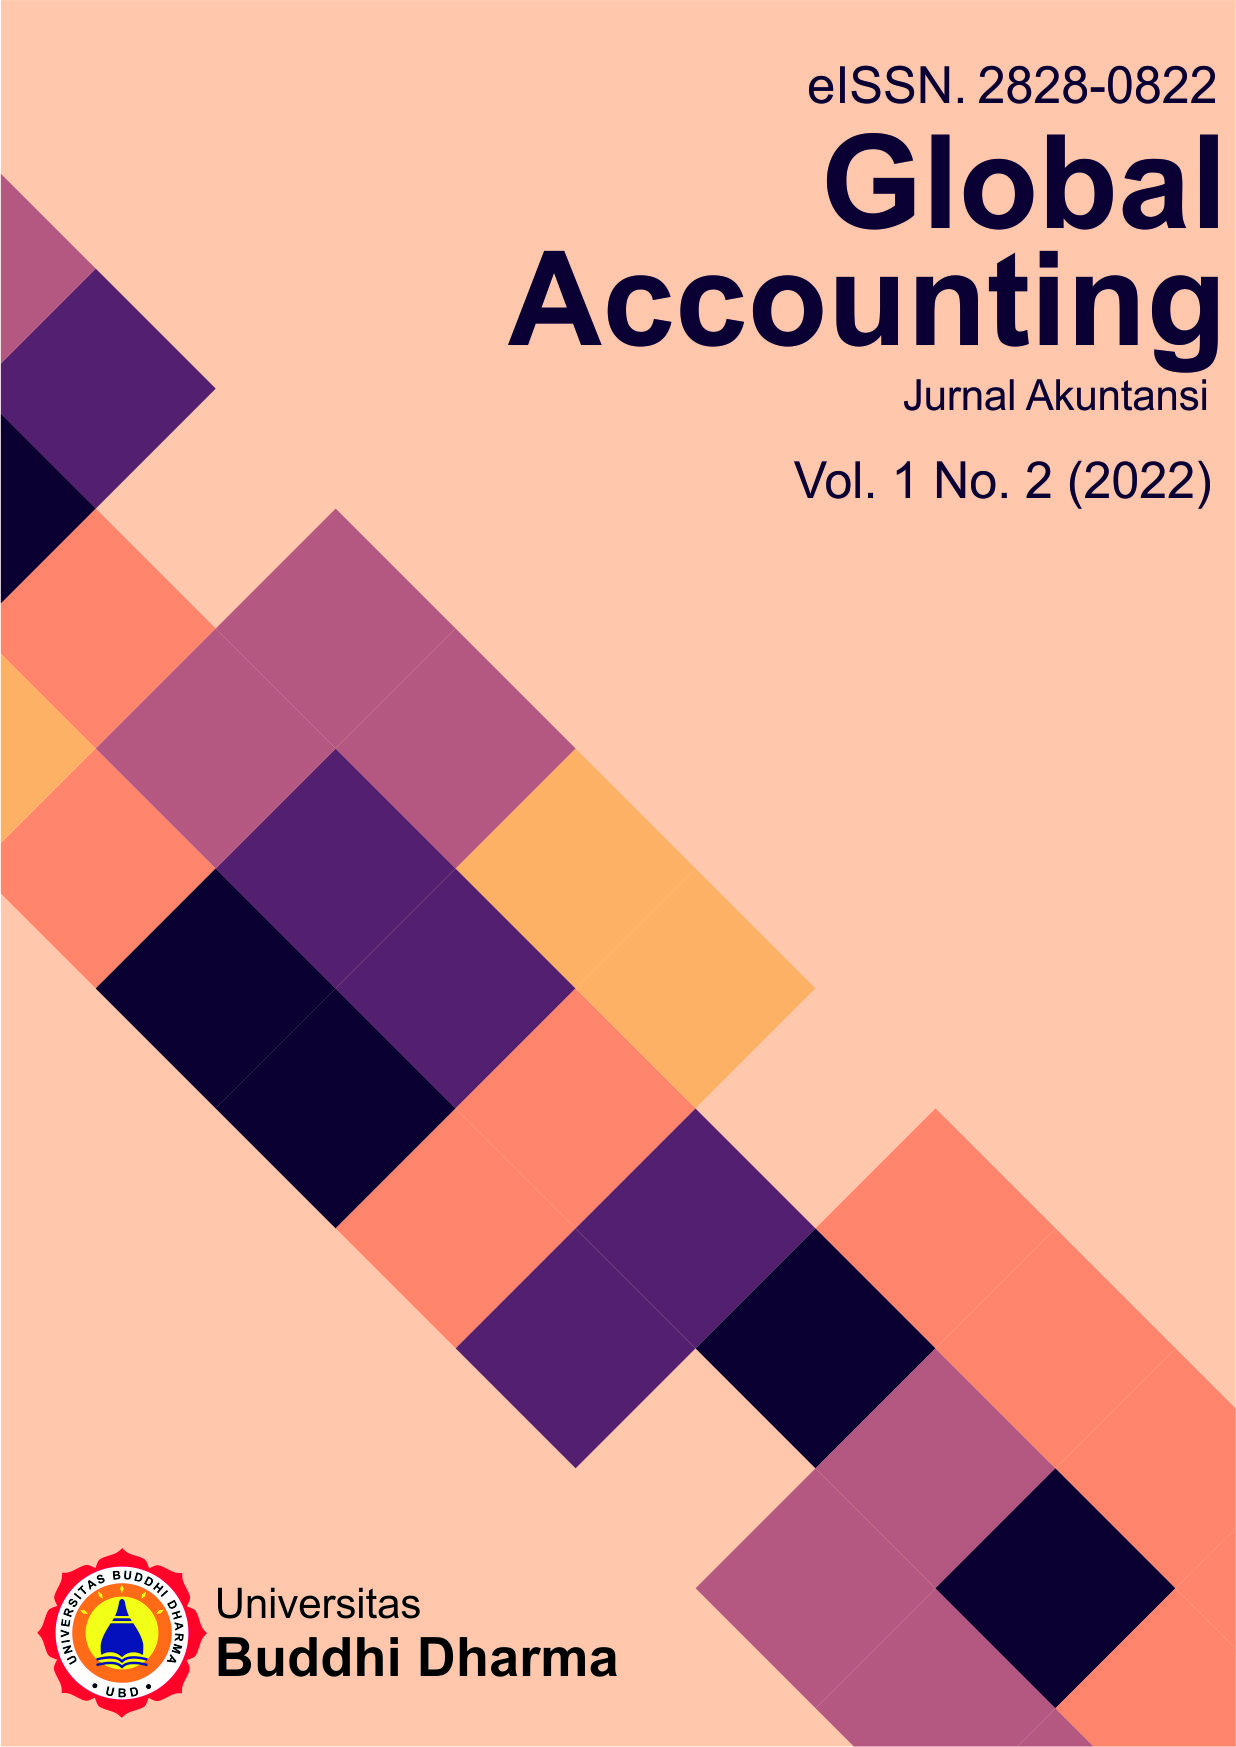 					View Vol. 1 No. 2 (2022): Global Accounting
				